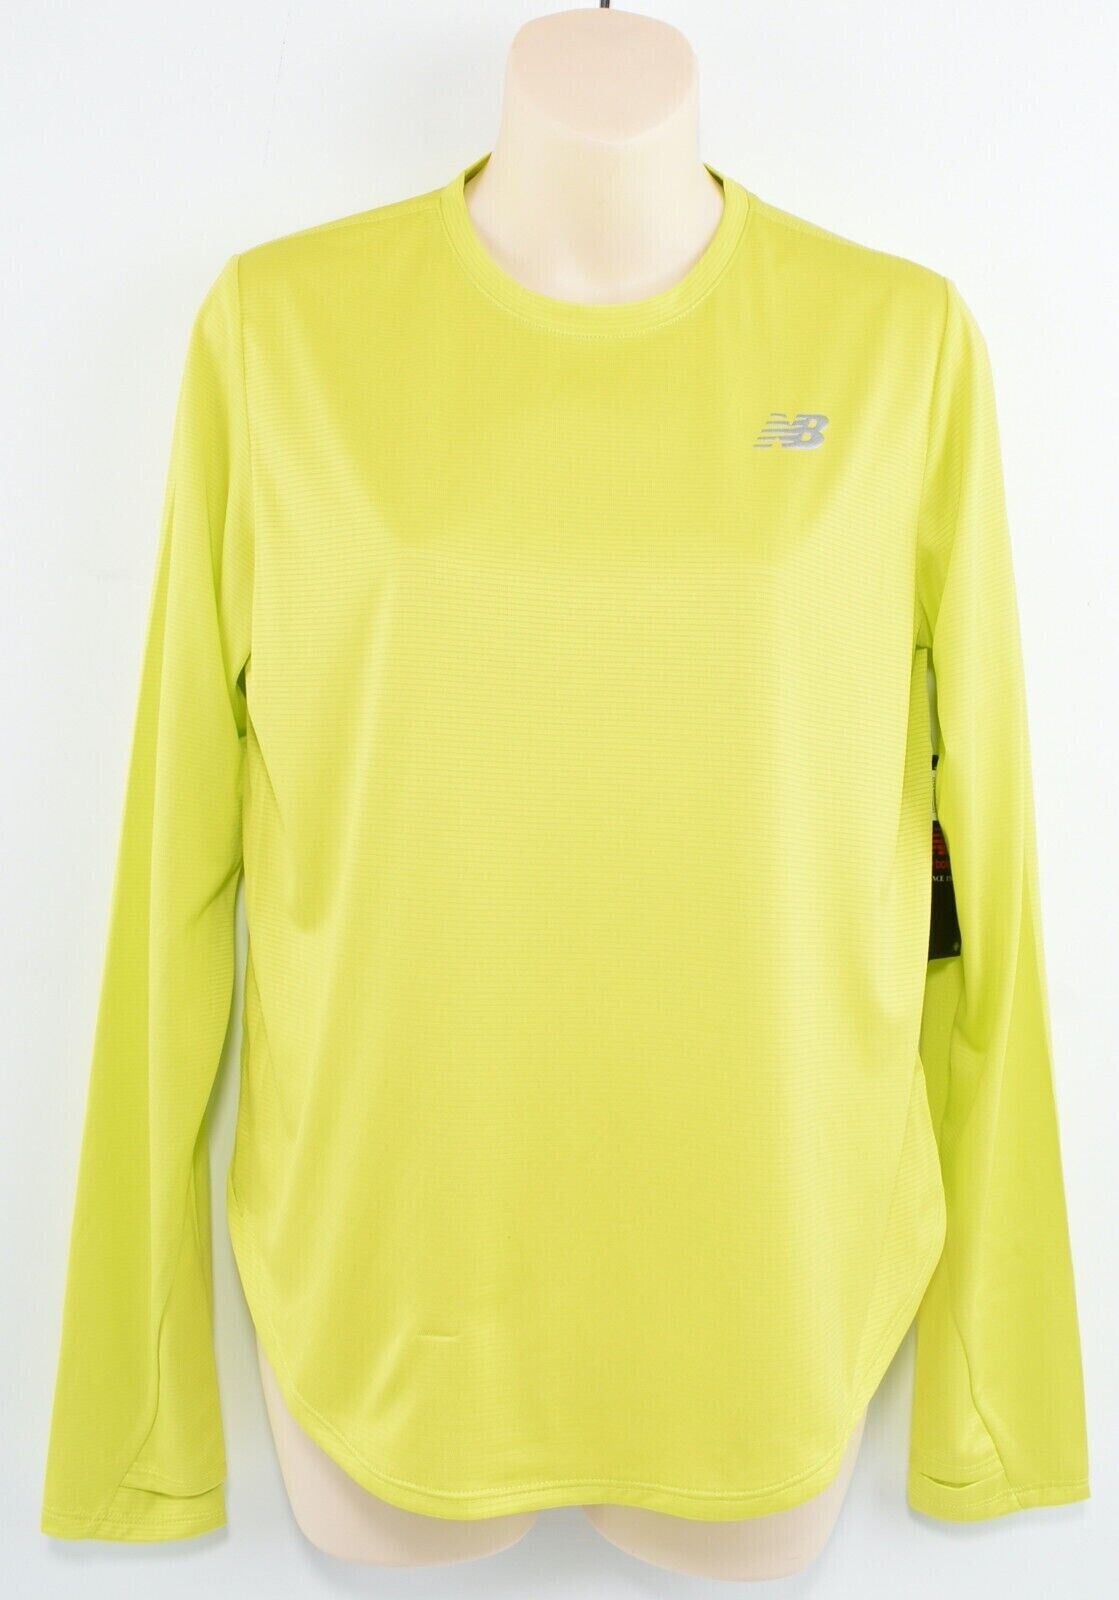 NEW BALANCE Women's ACCELERATE Long Sleeve Running Top, Neon Yellow, size L /14